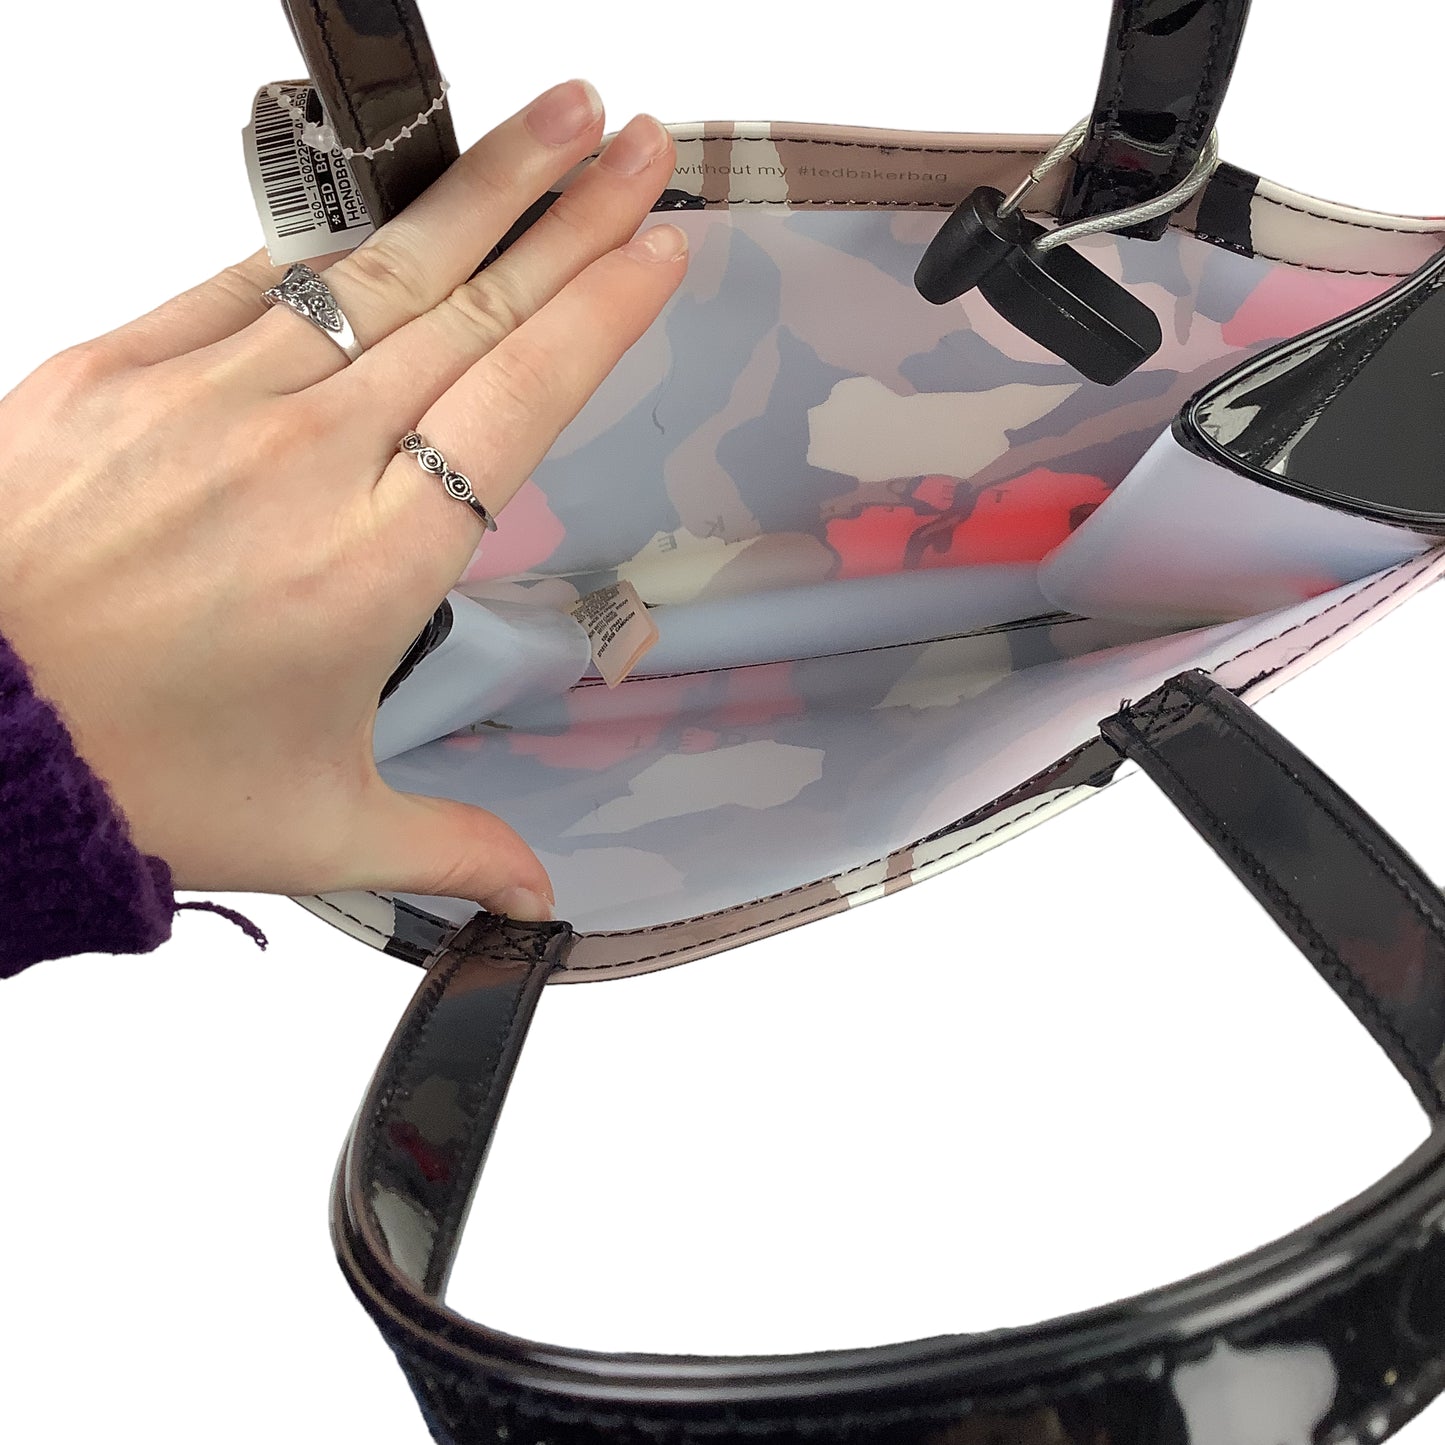 Handbag Designer By Ted Baker  Size: Small